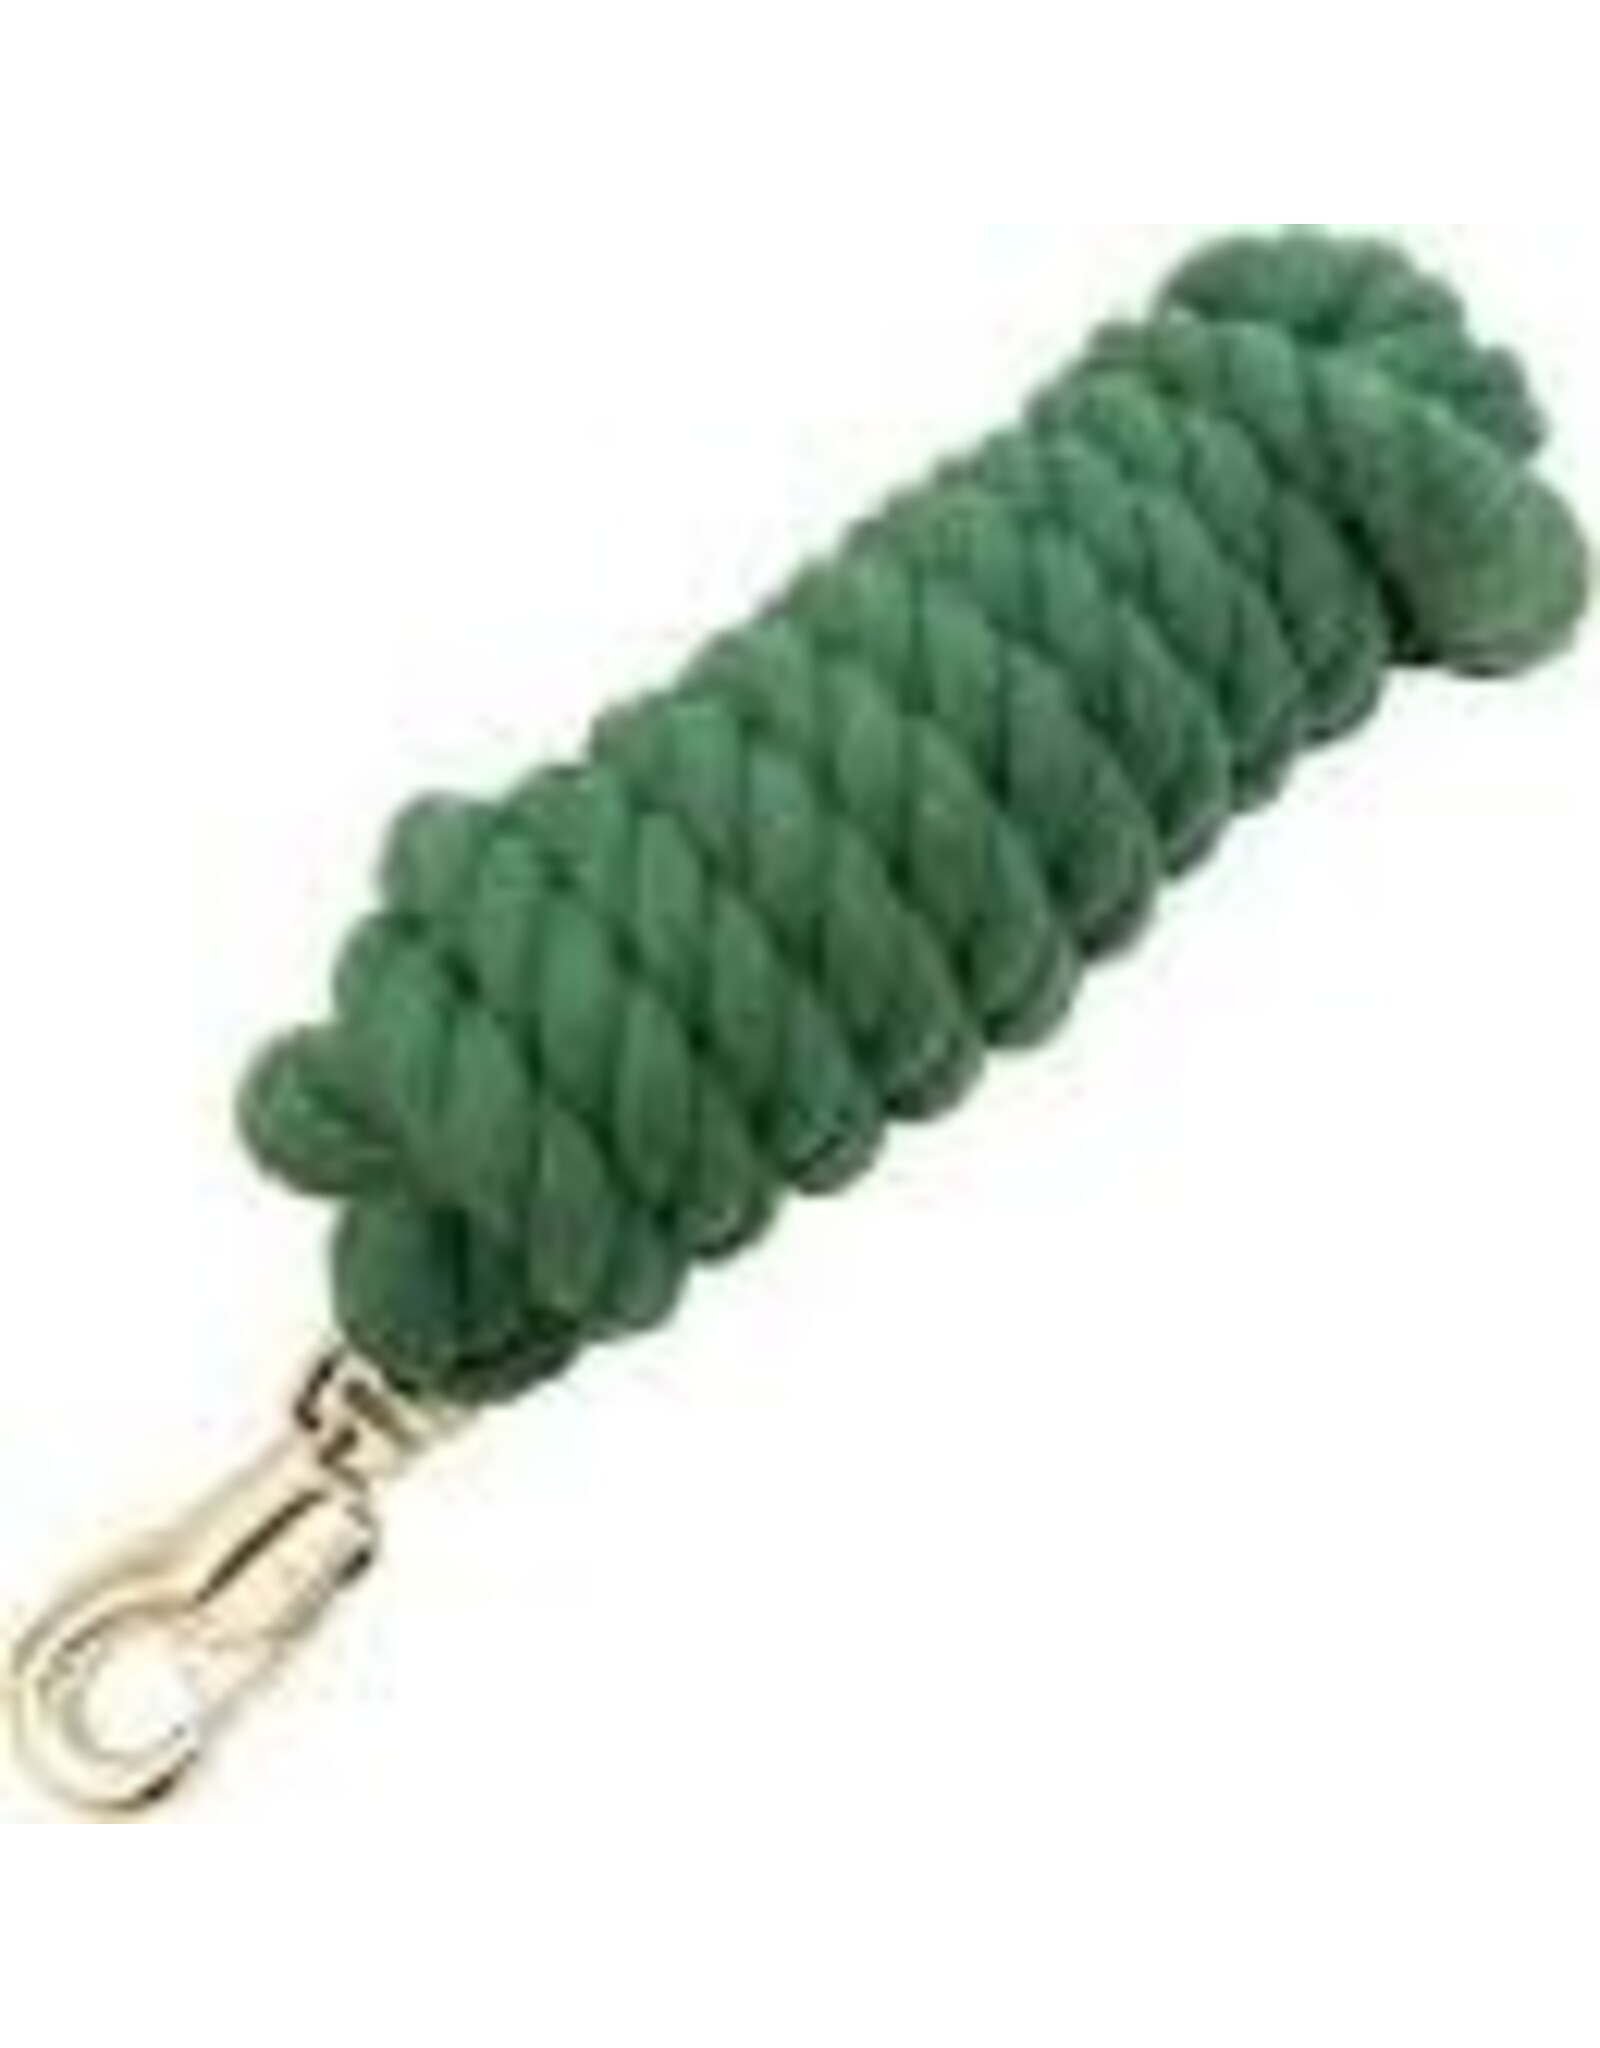 Cotton Rope Lead Shank 9/16" - 6' / Brass Bolt Snap -  Hunter Green - TP2509A-HG